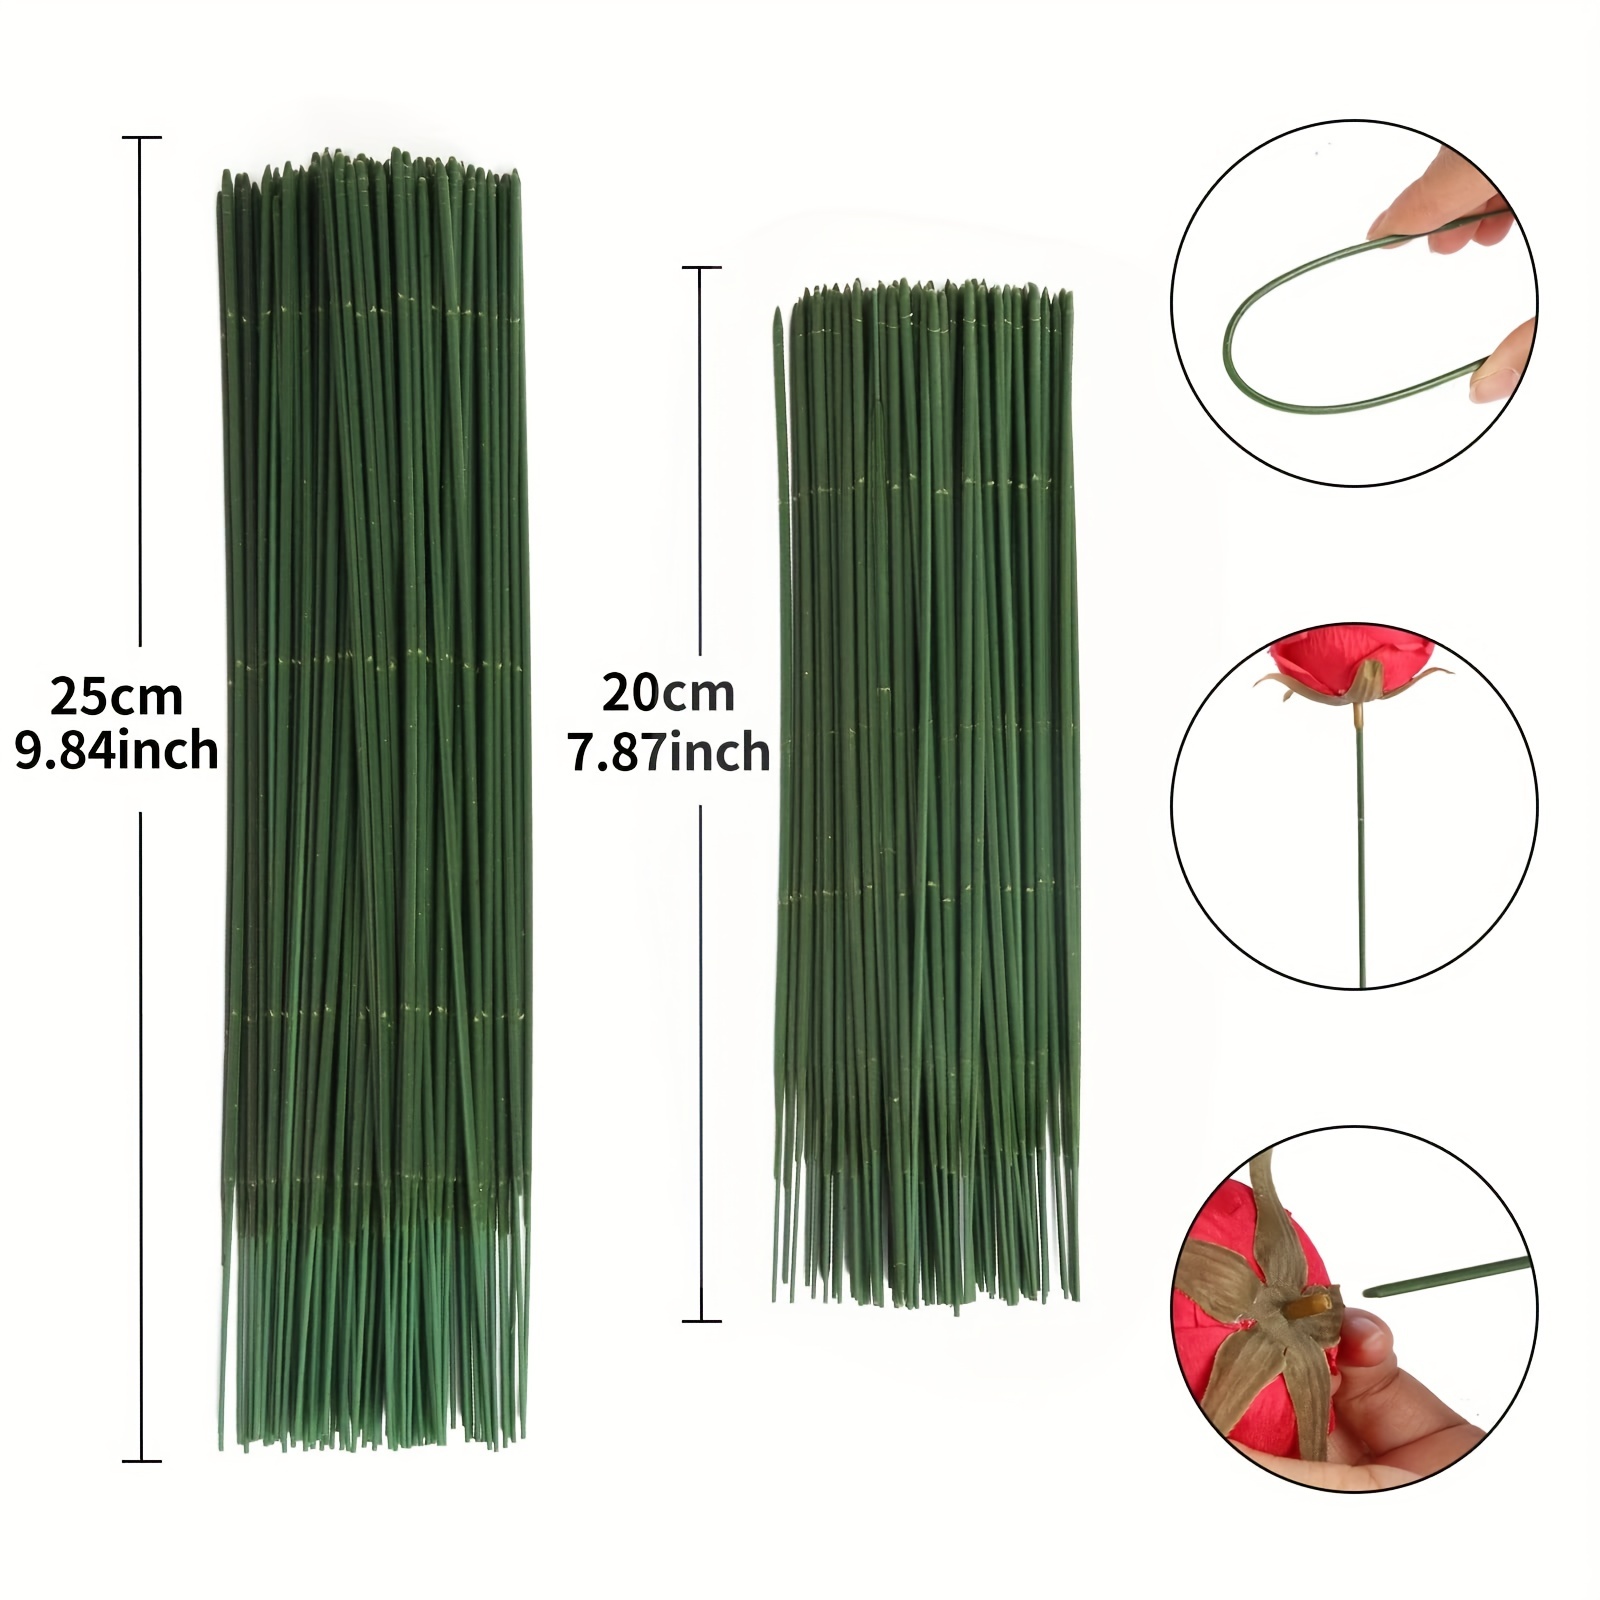  100 pcs Plastic Floral Stem 9.84 inch/25 cm, Artificial Flower  Rod Flower Stem Wire Making Accessories, DIY Crafts Bouquet Stem Flower  Arrangements Decor Supplies (Green - 25 cm) : Arts, Crafts & Sewing